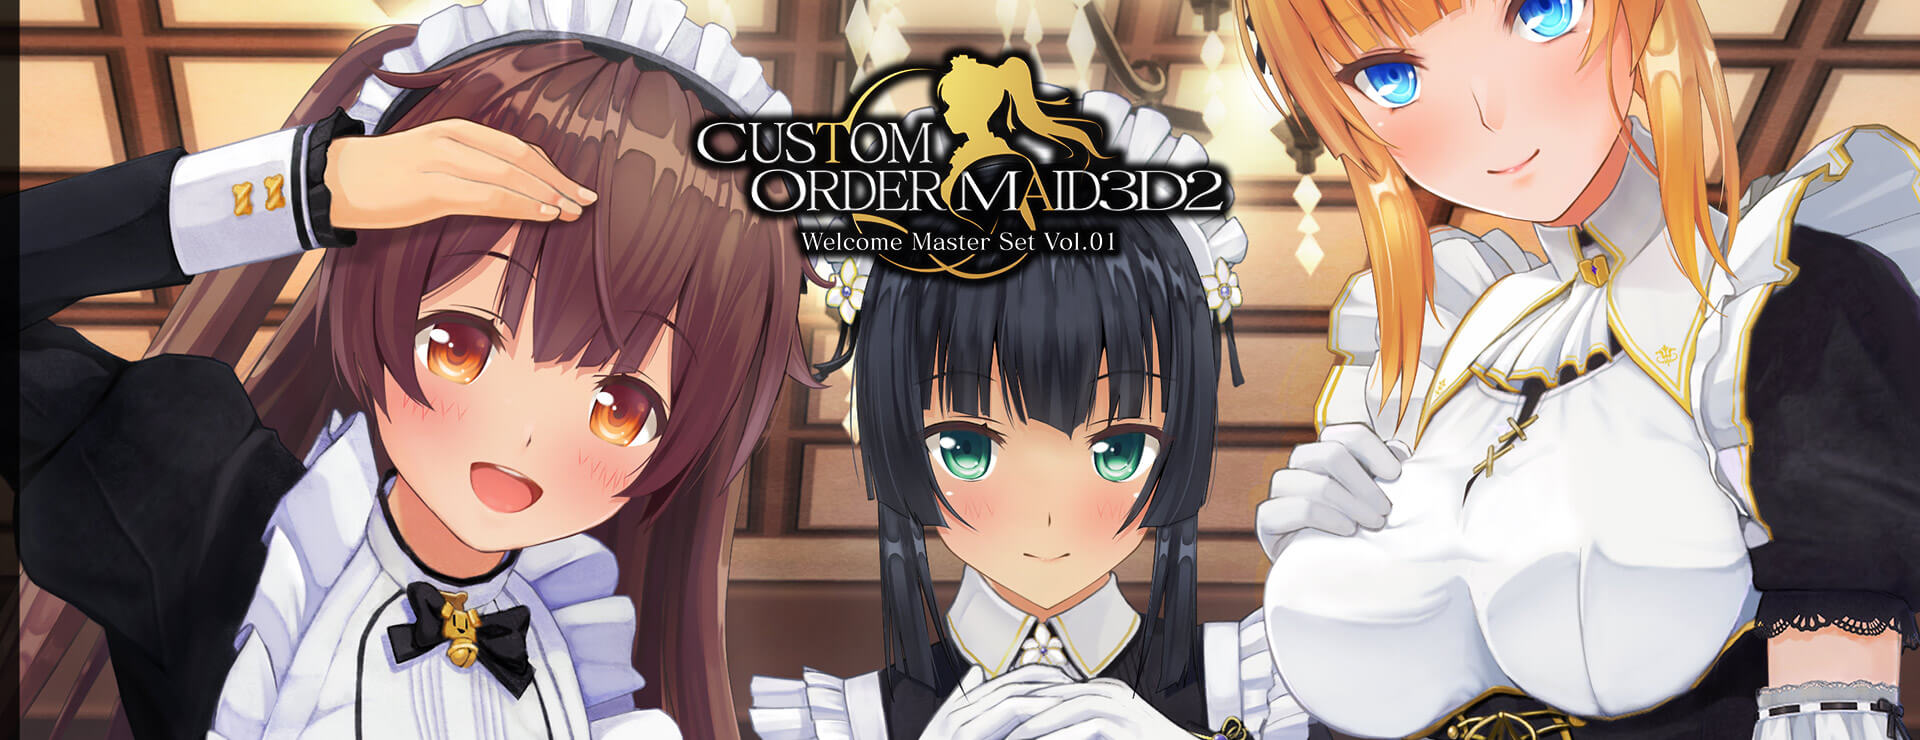 Custom Order Maid 3D2: Welcome Master Set Vol. 01 DLC - Simulation Spiel